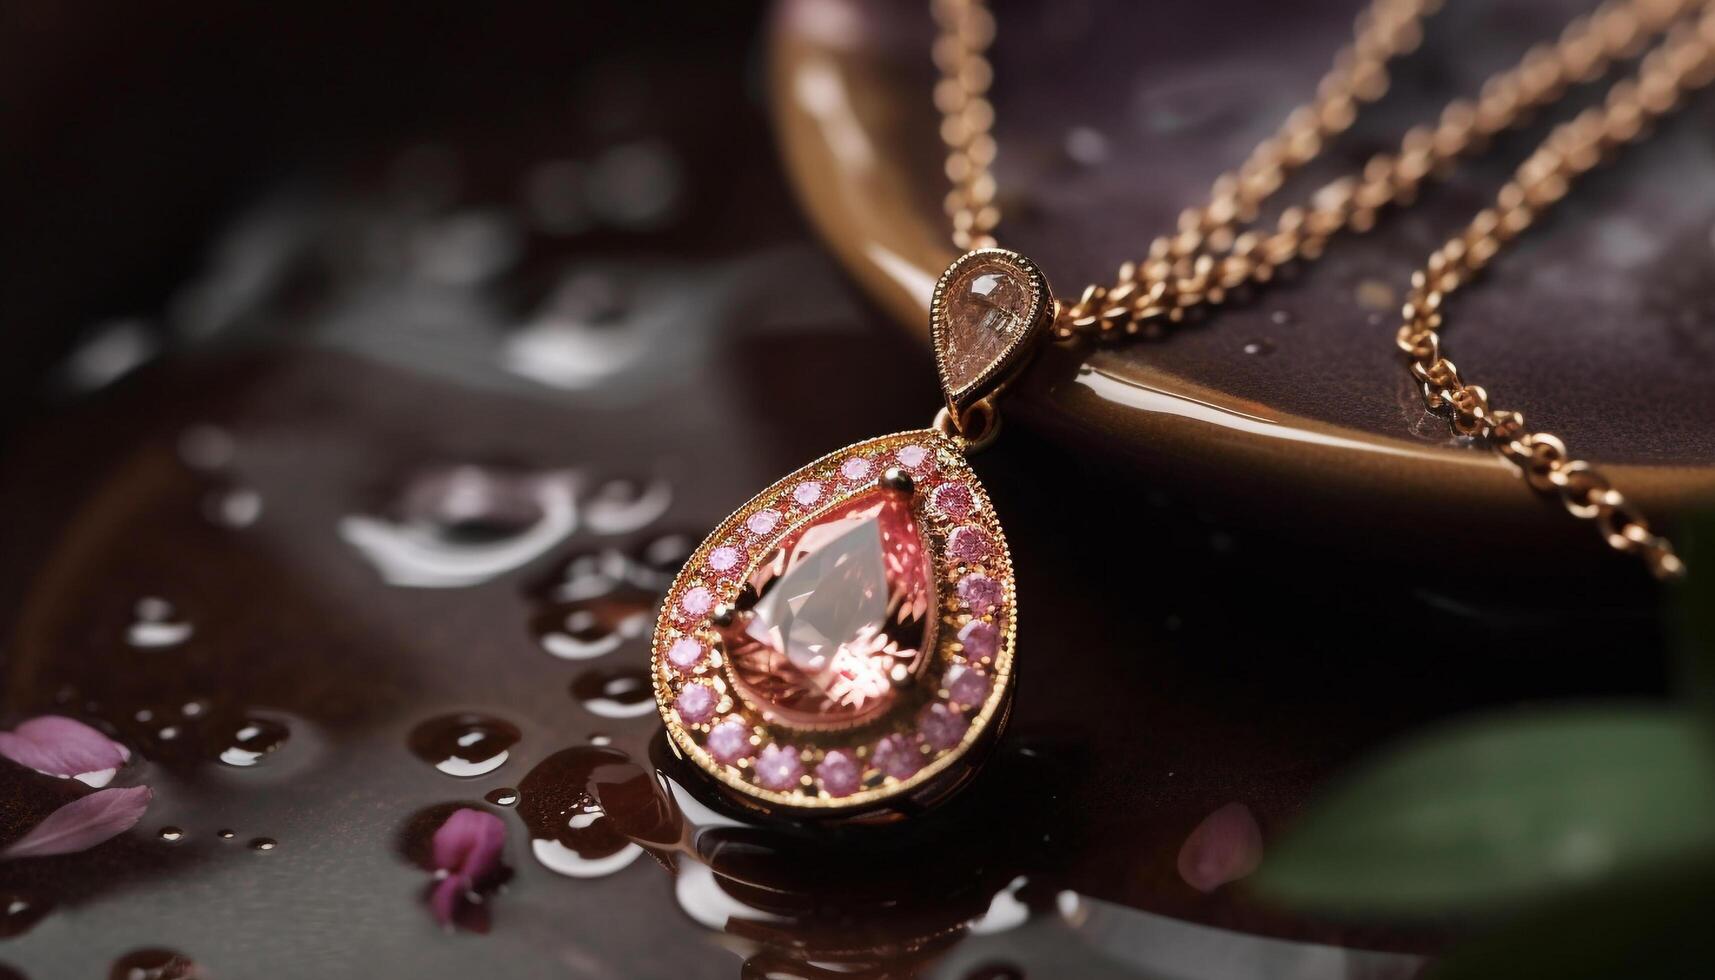 Shiny gemstone necklace reflects elegance and glamour generated by AI photo